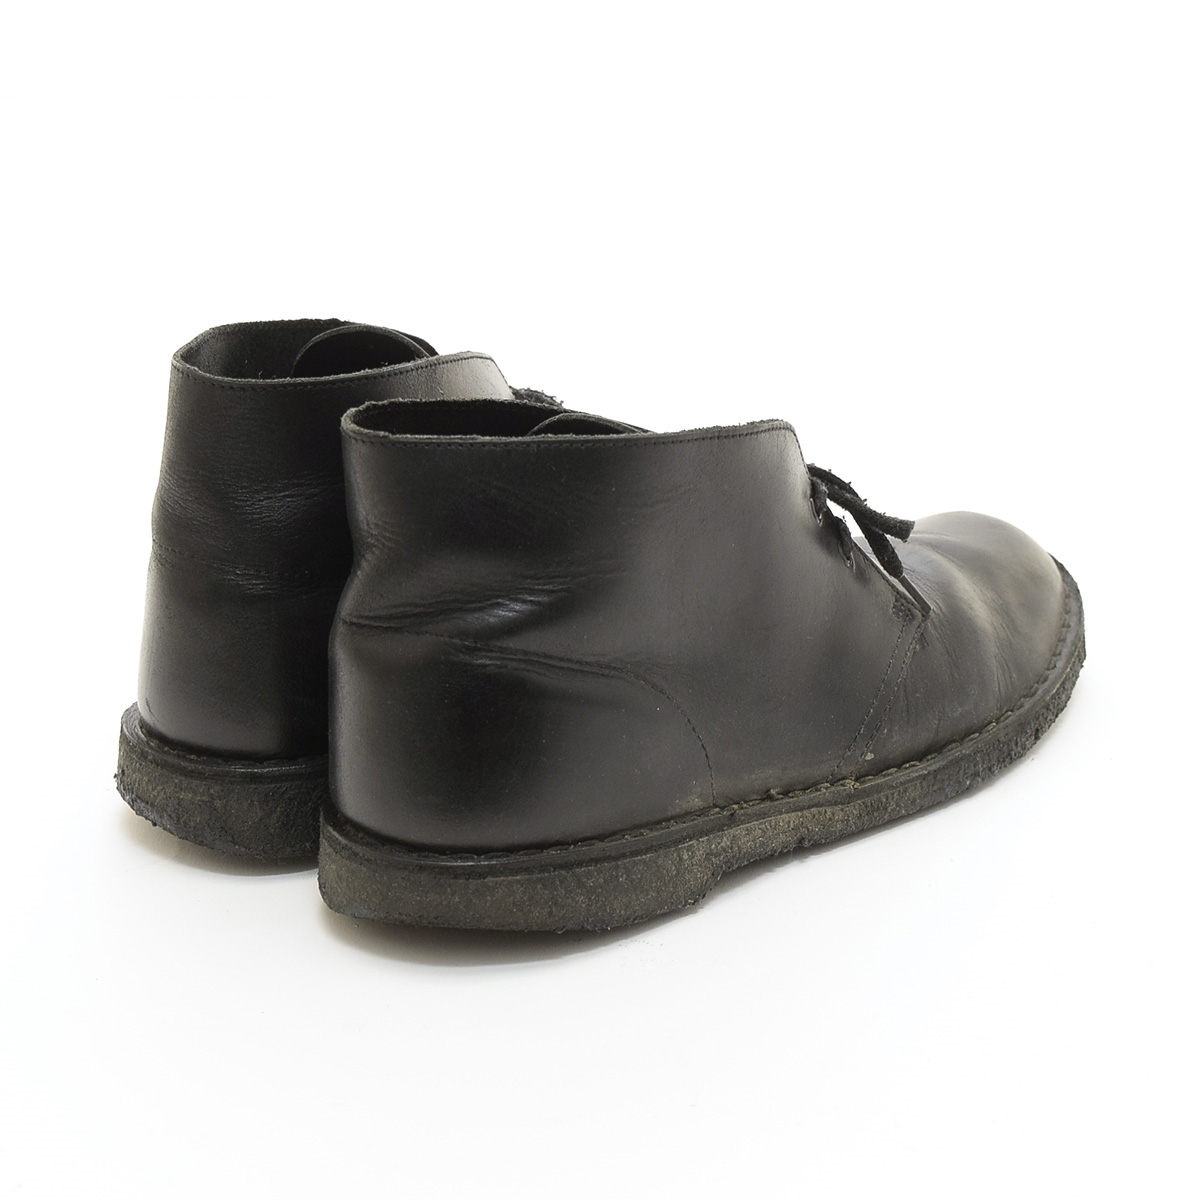 *495146 Clarks Clarks * chukka boots desert boots size UK10/29.0cm leather men's black 